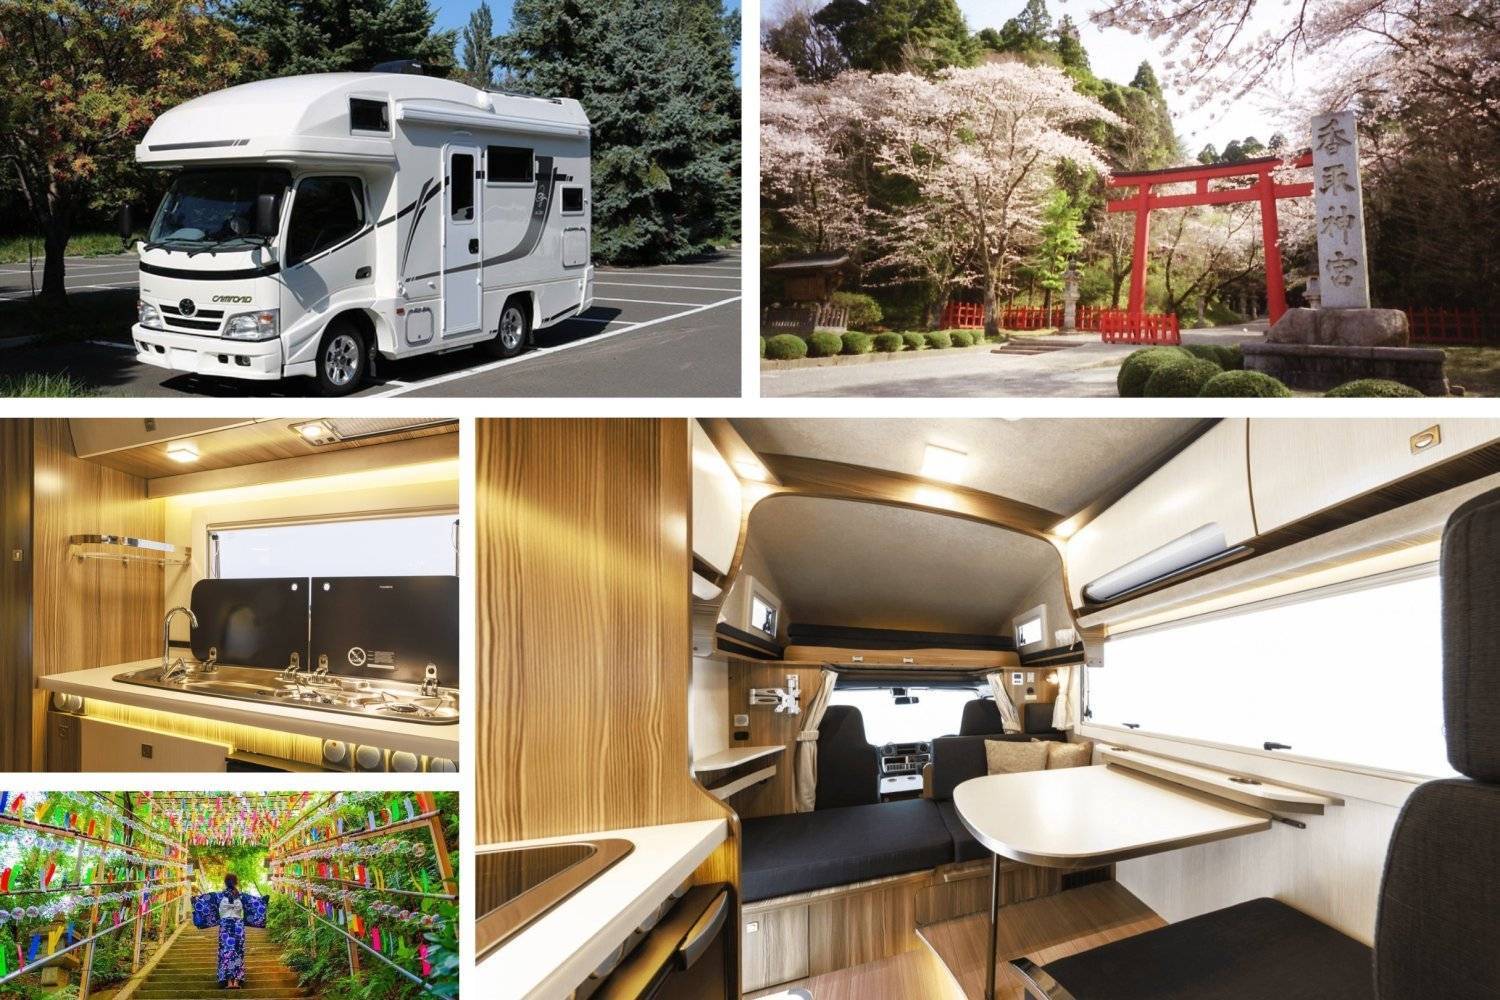 Young's Holidays 【Tokyo】Japan 5ppl RV Caravan 24 hours Rental Experience 1